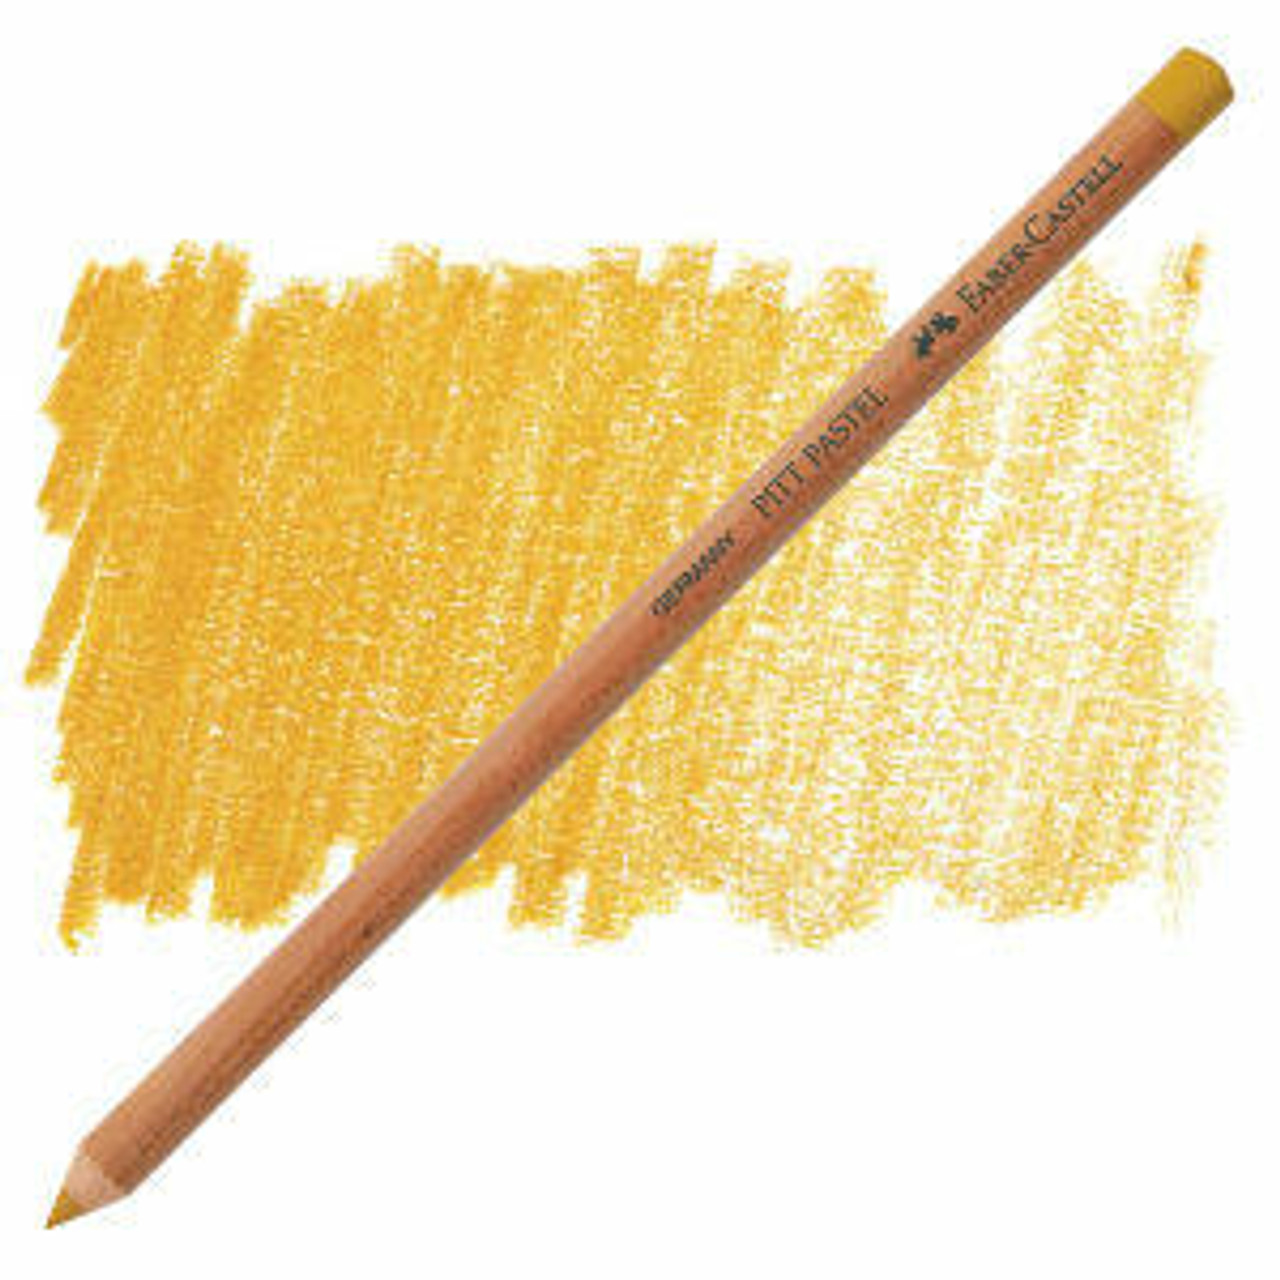 Faber-Castell Pitt Artist Pastel Pencil, Wax and Oil Free